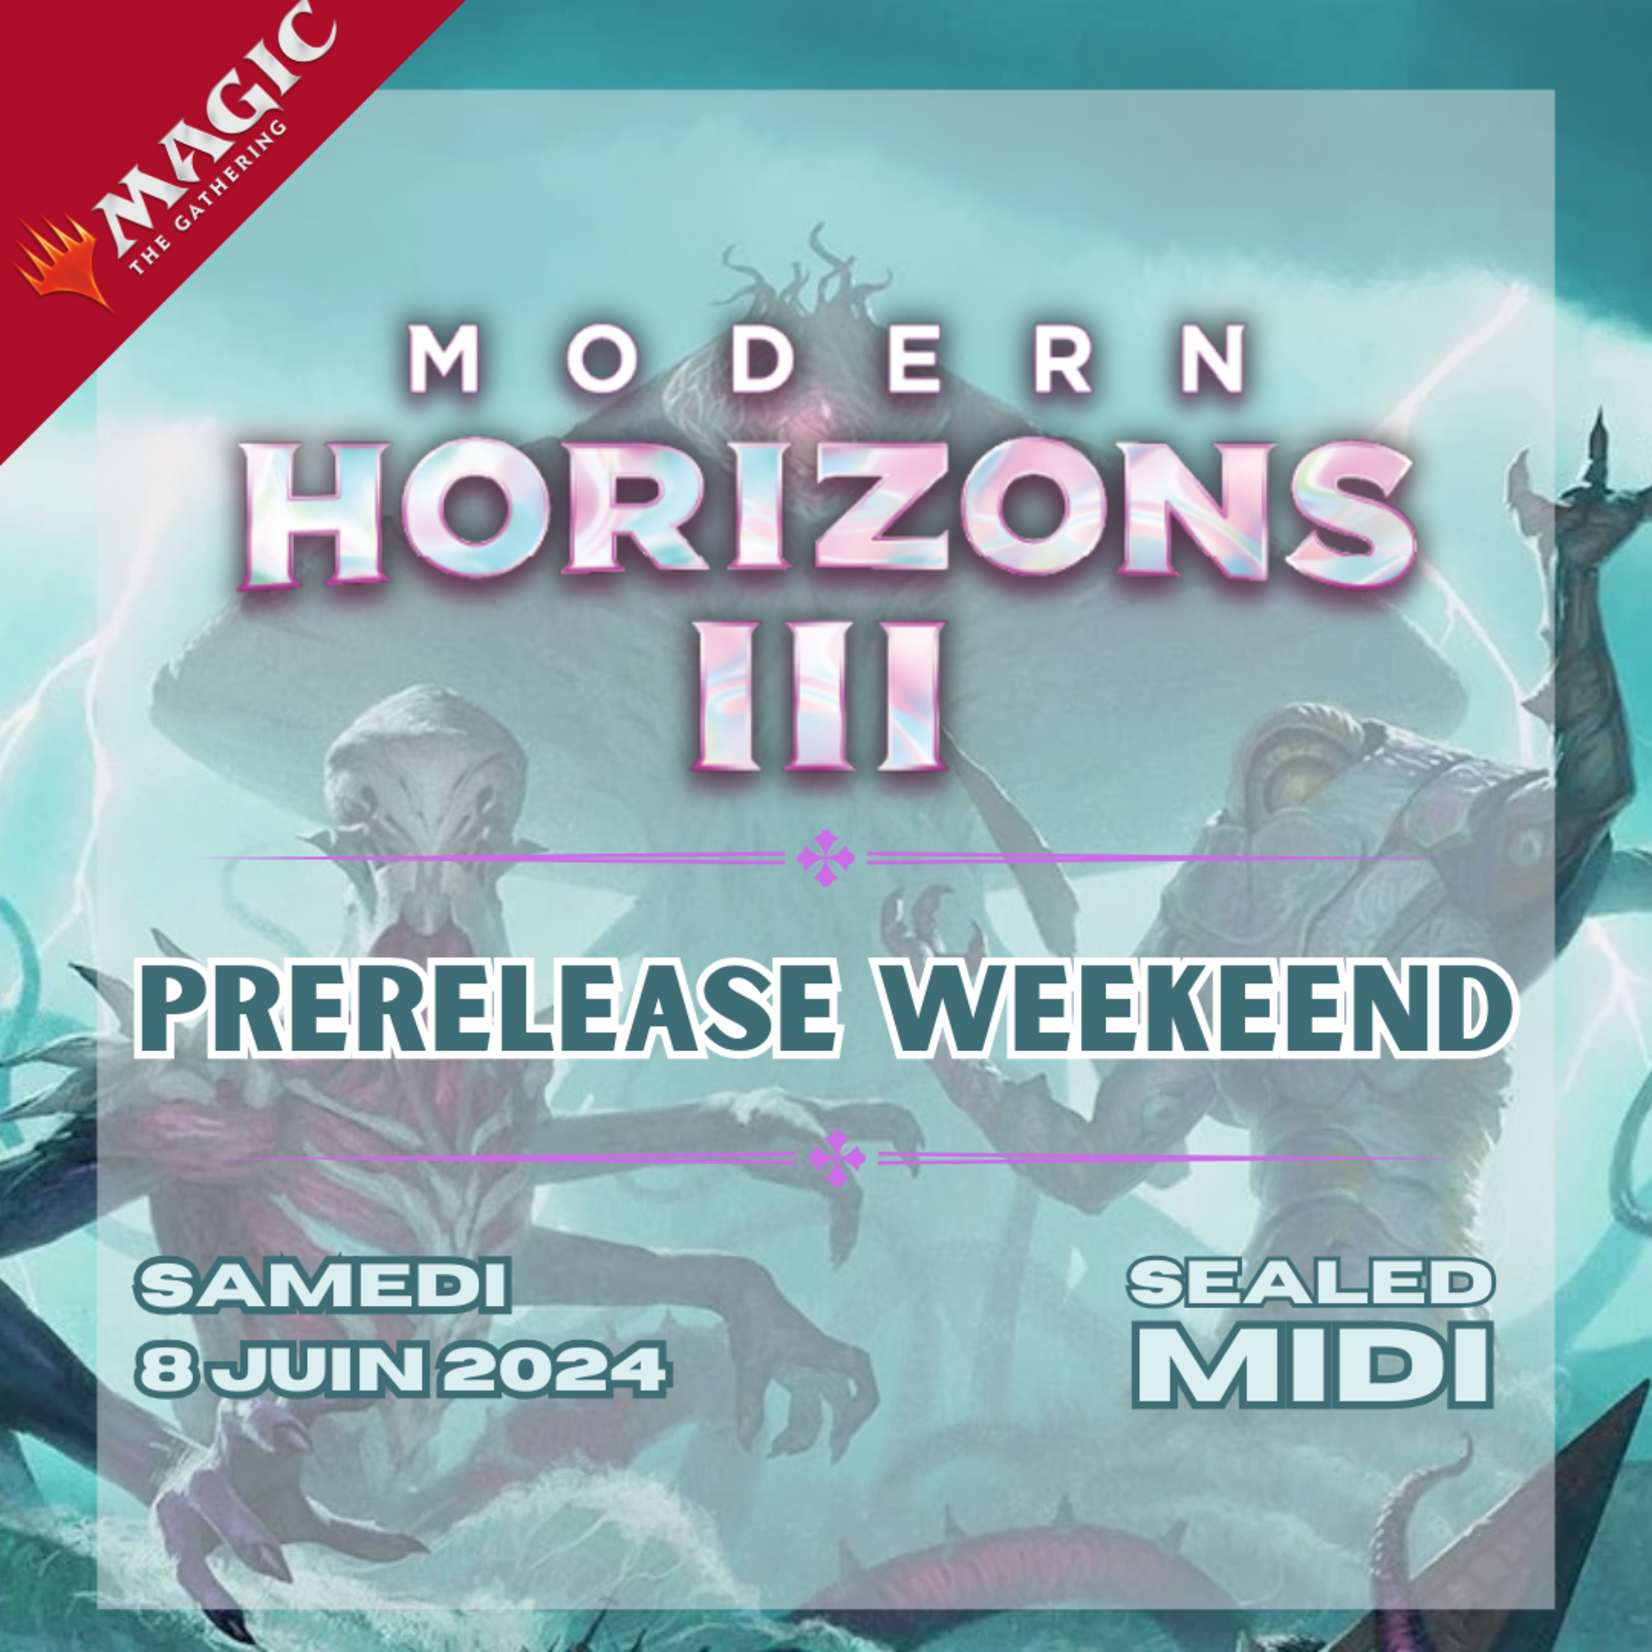 Prerelease Modern Horizon 3 - SEALED - Samedi 8 juin Midi